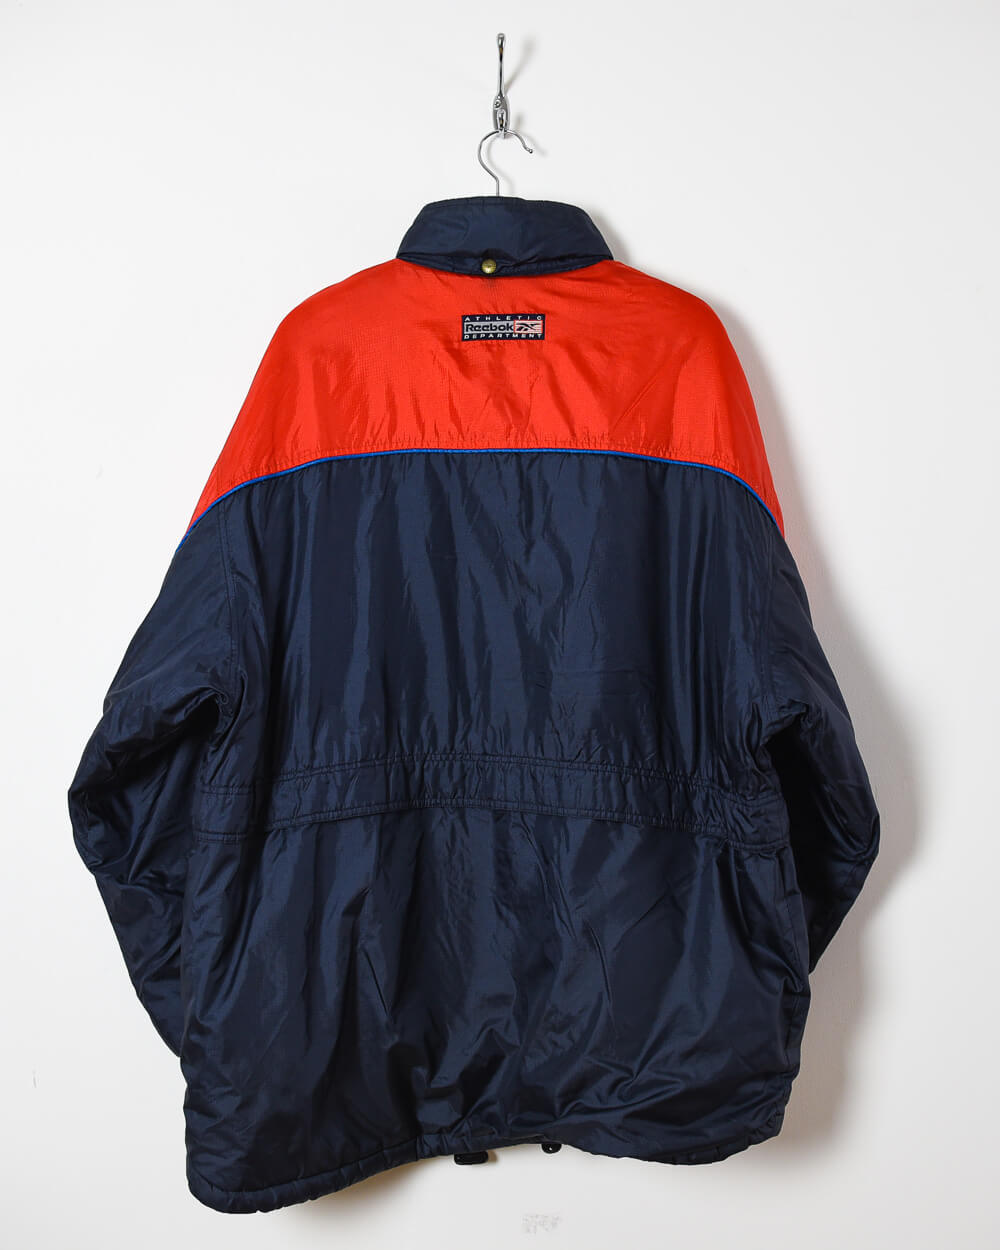 Reebok Athletic Dept Winter Coat - X-Large - Domno Vintage 90s, 80s, 00s Retro and Vintage Clothing 